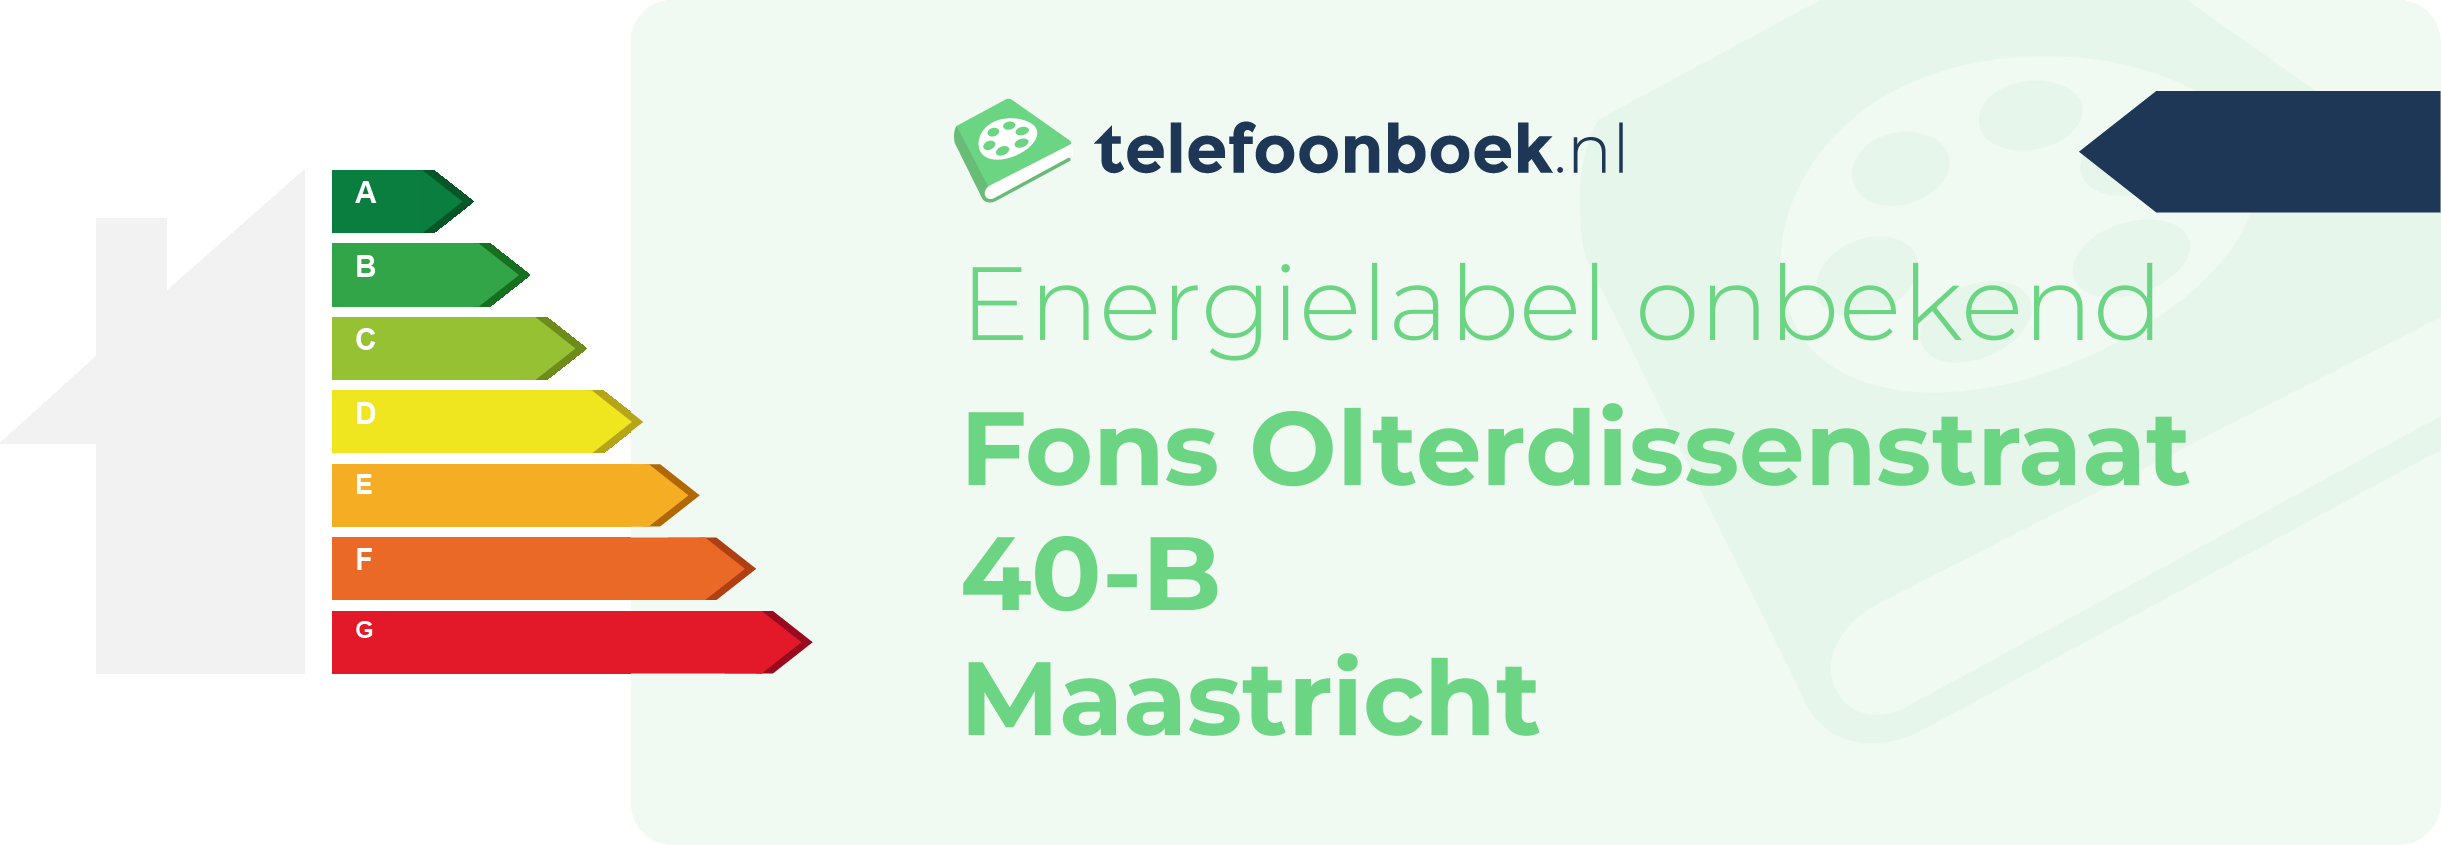 Energielabel Fons Olterdissenstraat 40-B Maastricht